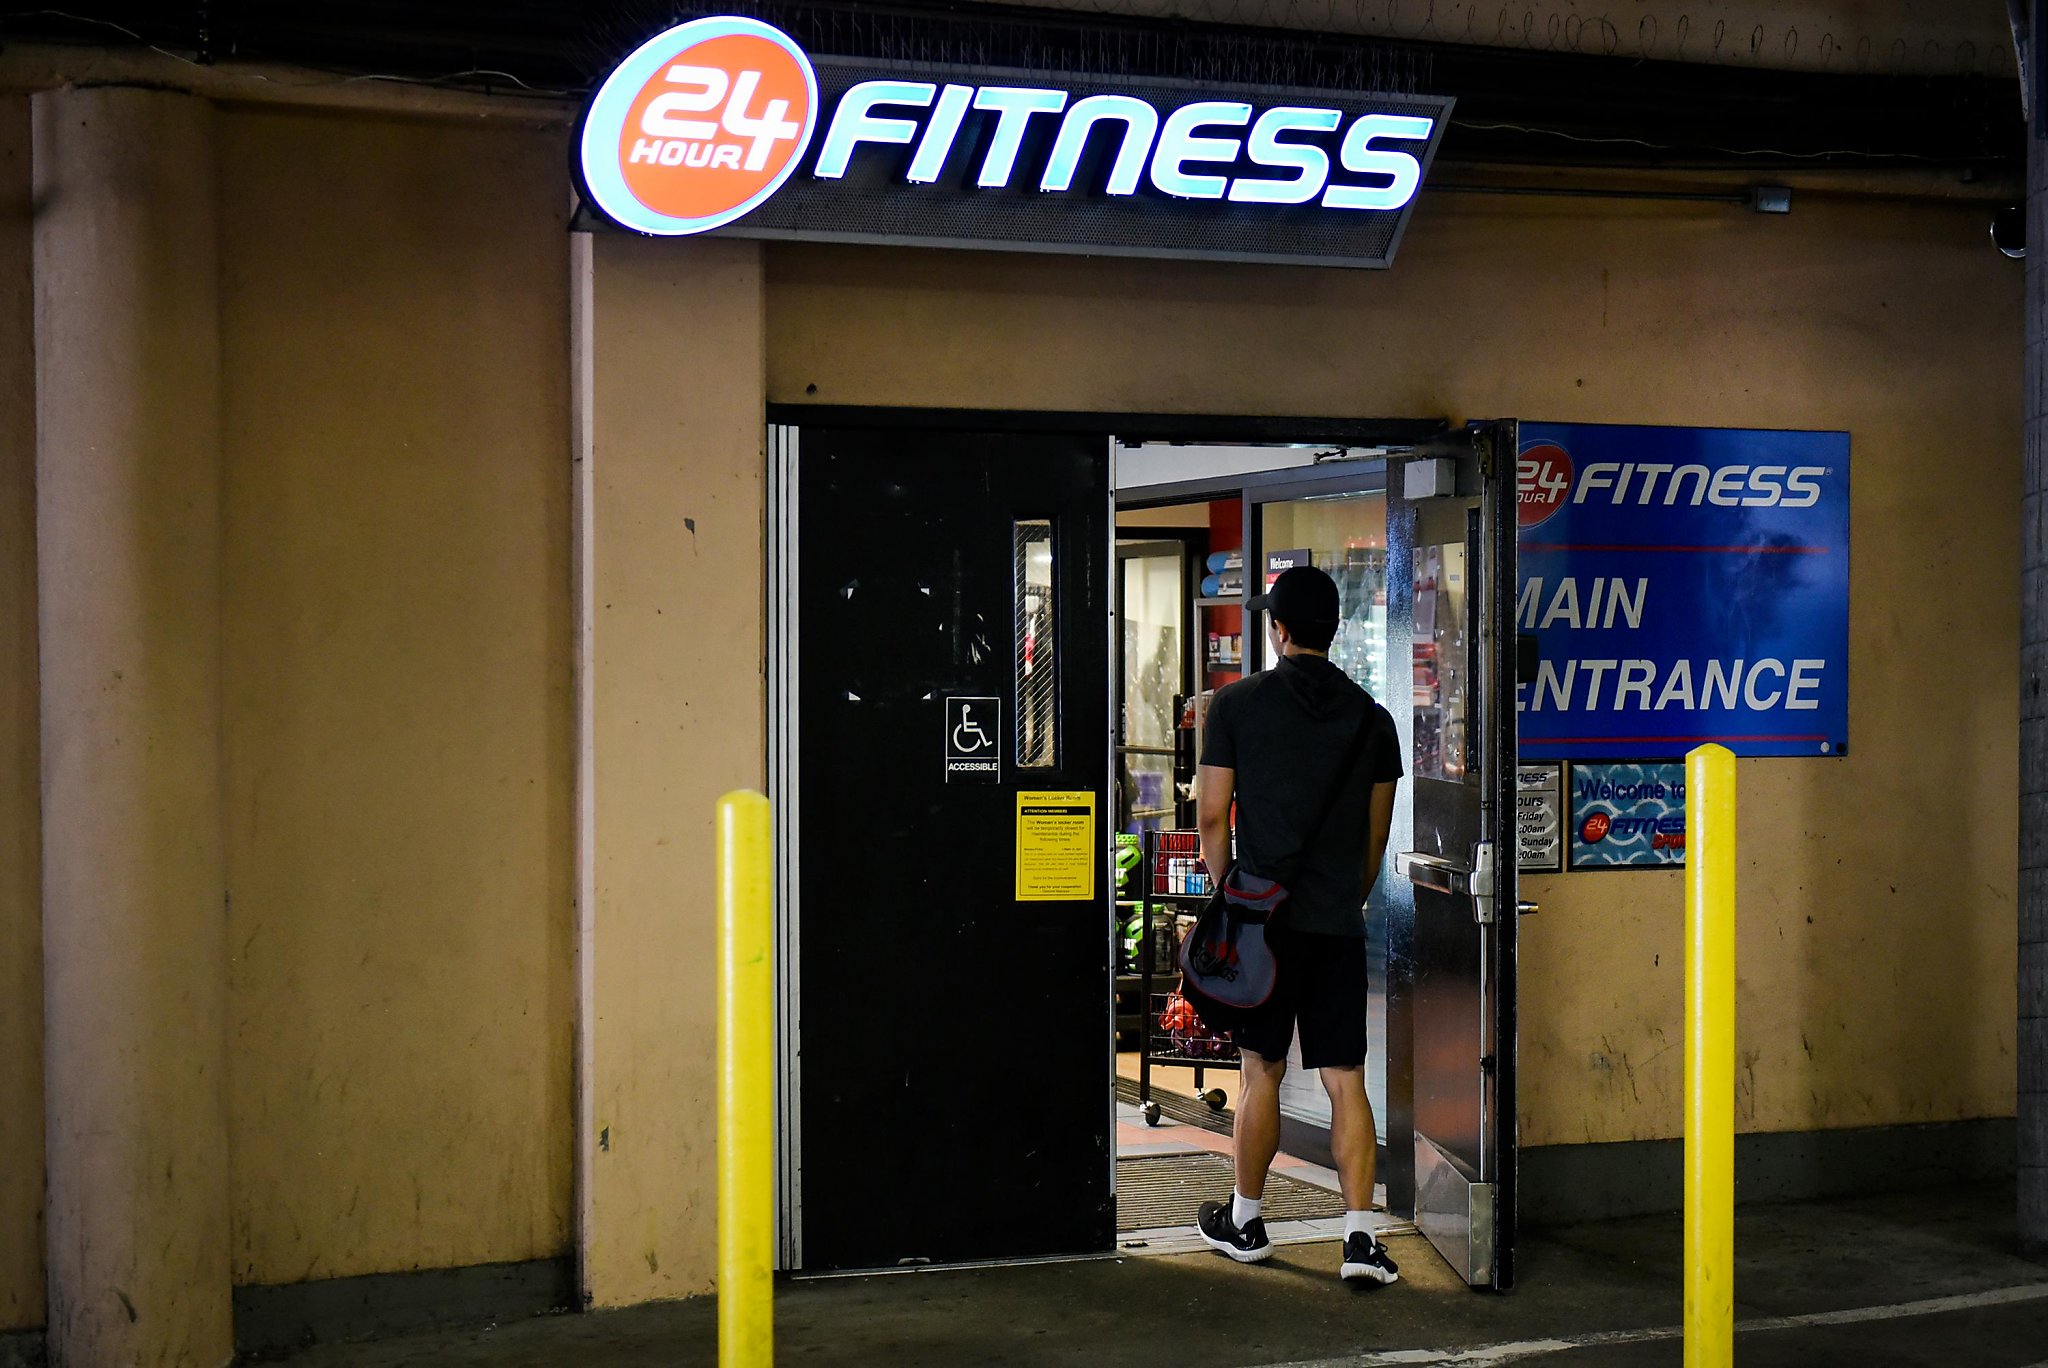 10 Minute 24 hour gym membership reddit for Fat Body